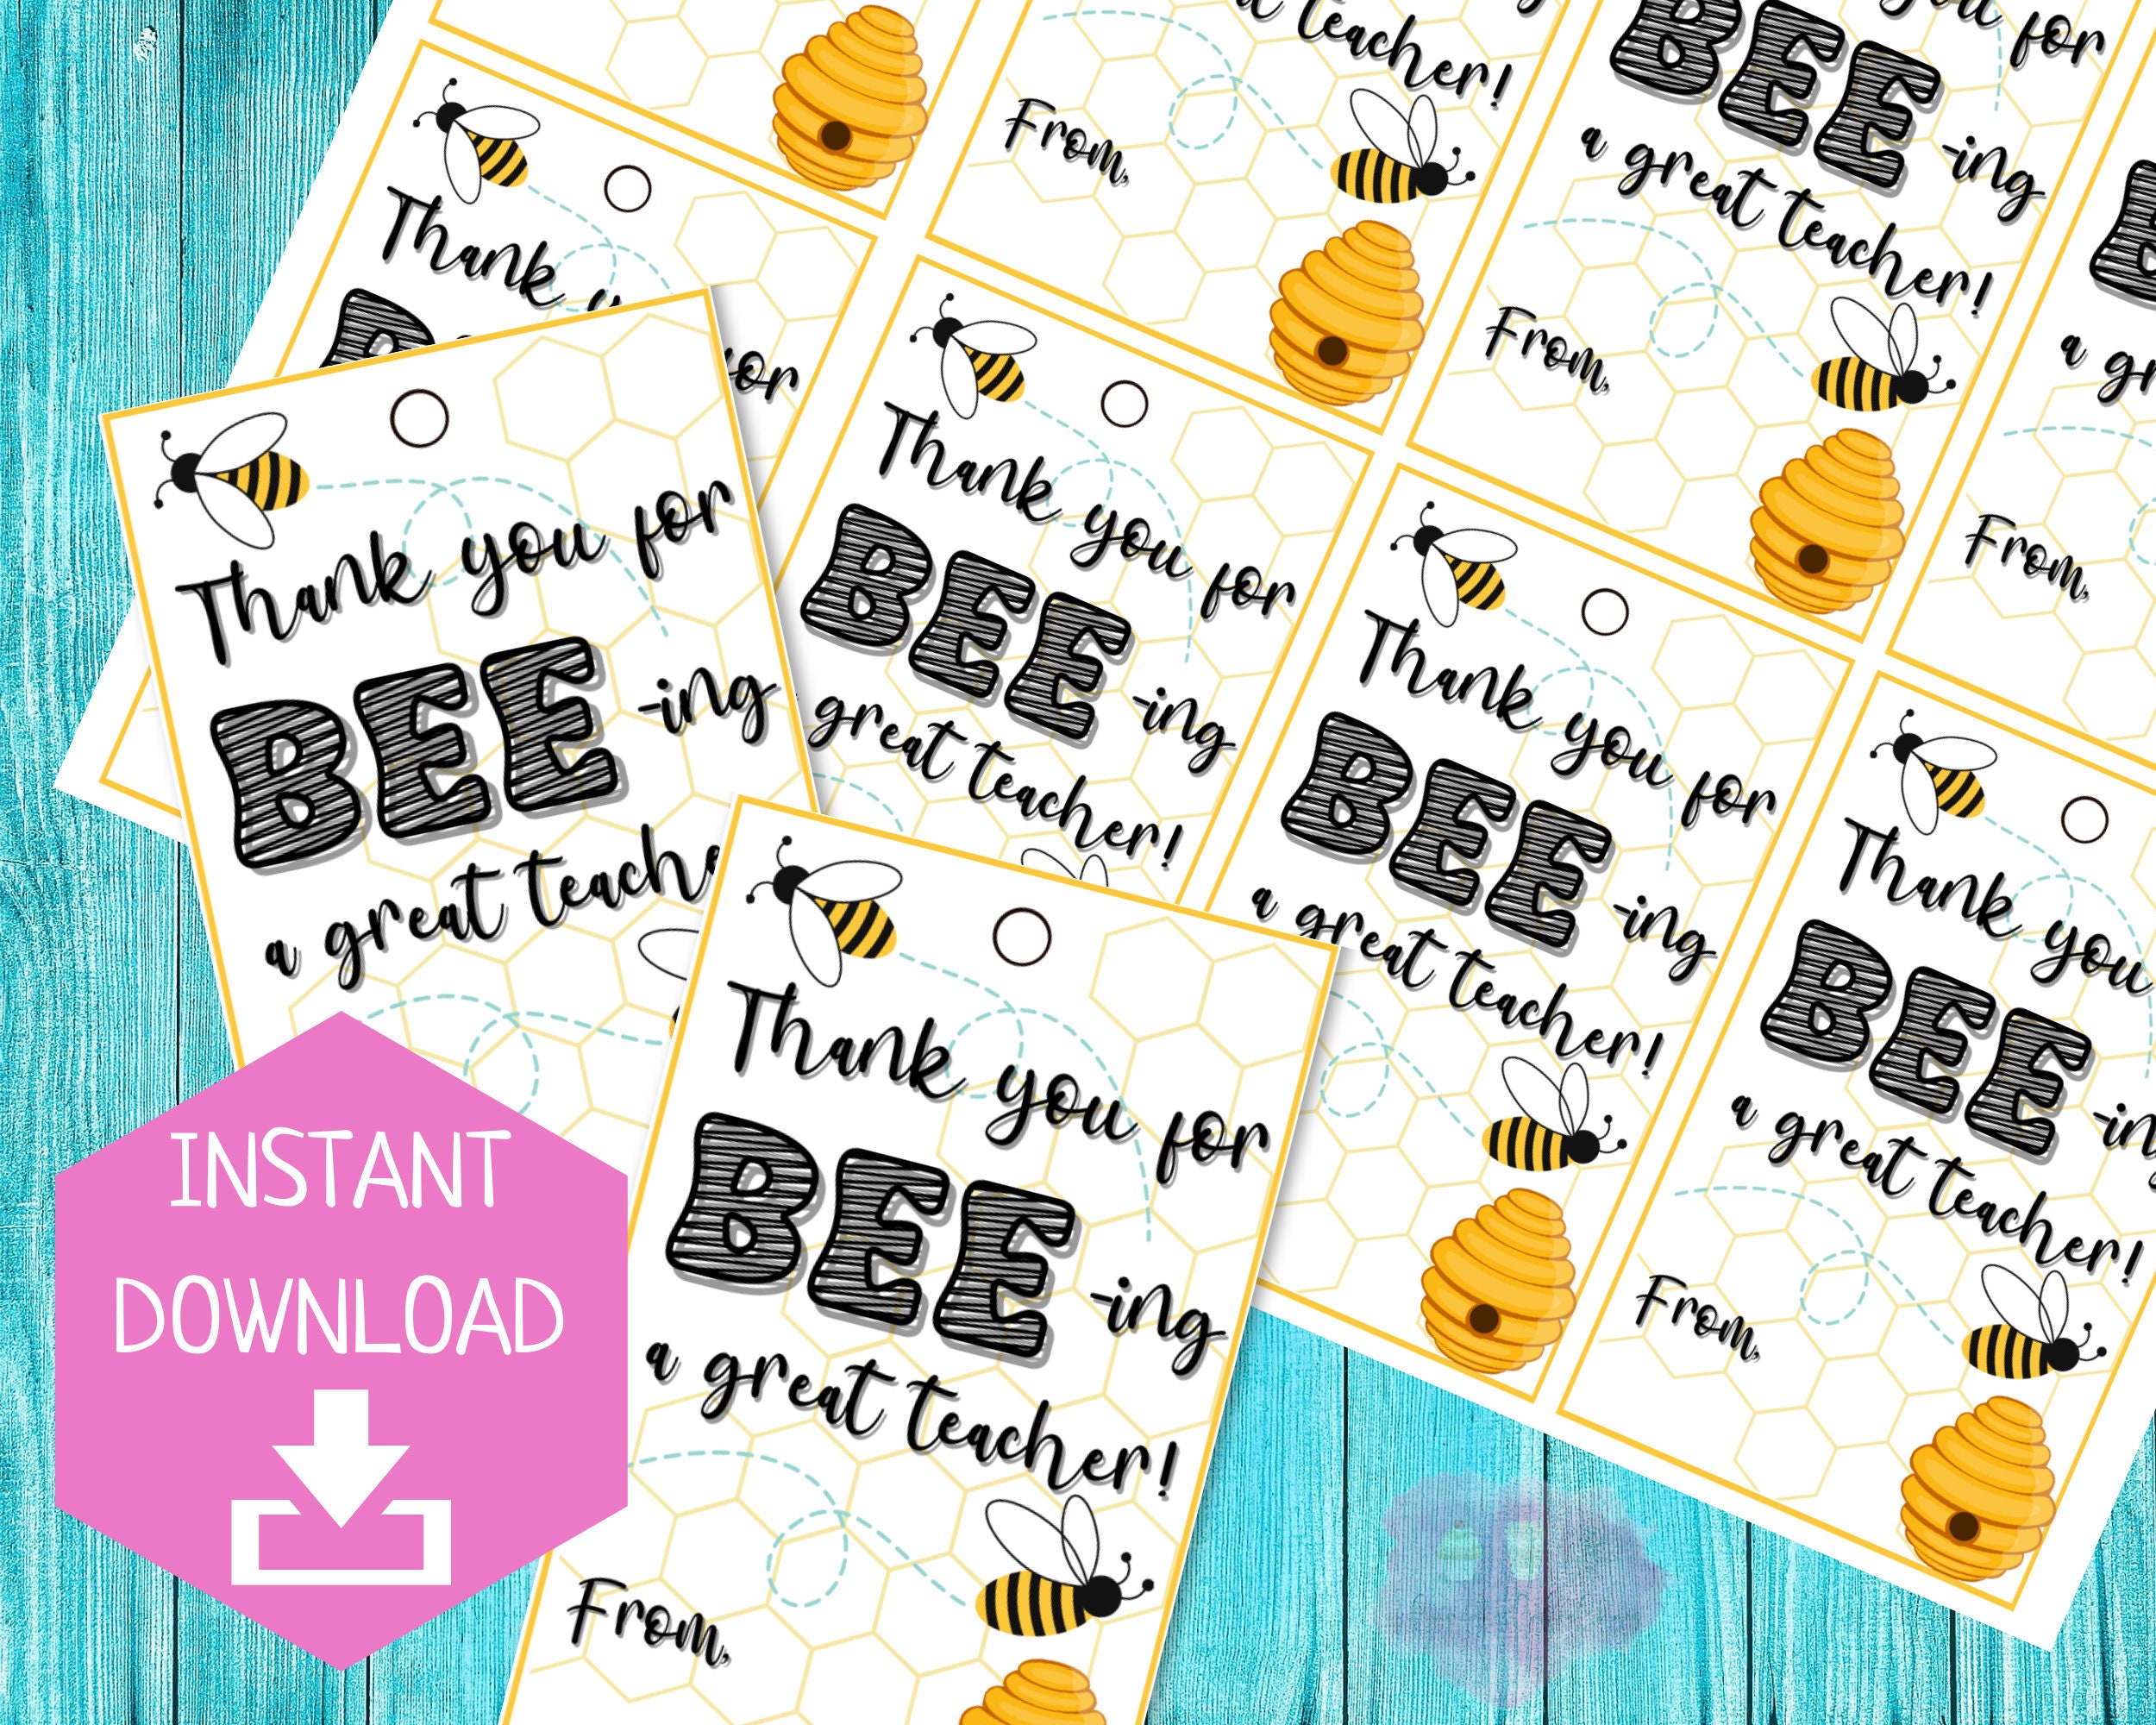 Custom Bee Birthday Backdrop, Bumble Bee Birthday, Bee Birthday  Decorations, Bee Party Banner, Bee Birthday Decor, Bee Day Party Ideas 